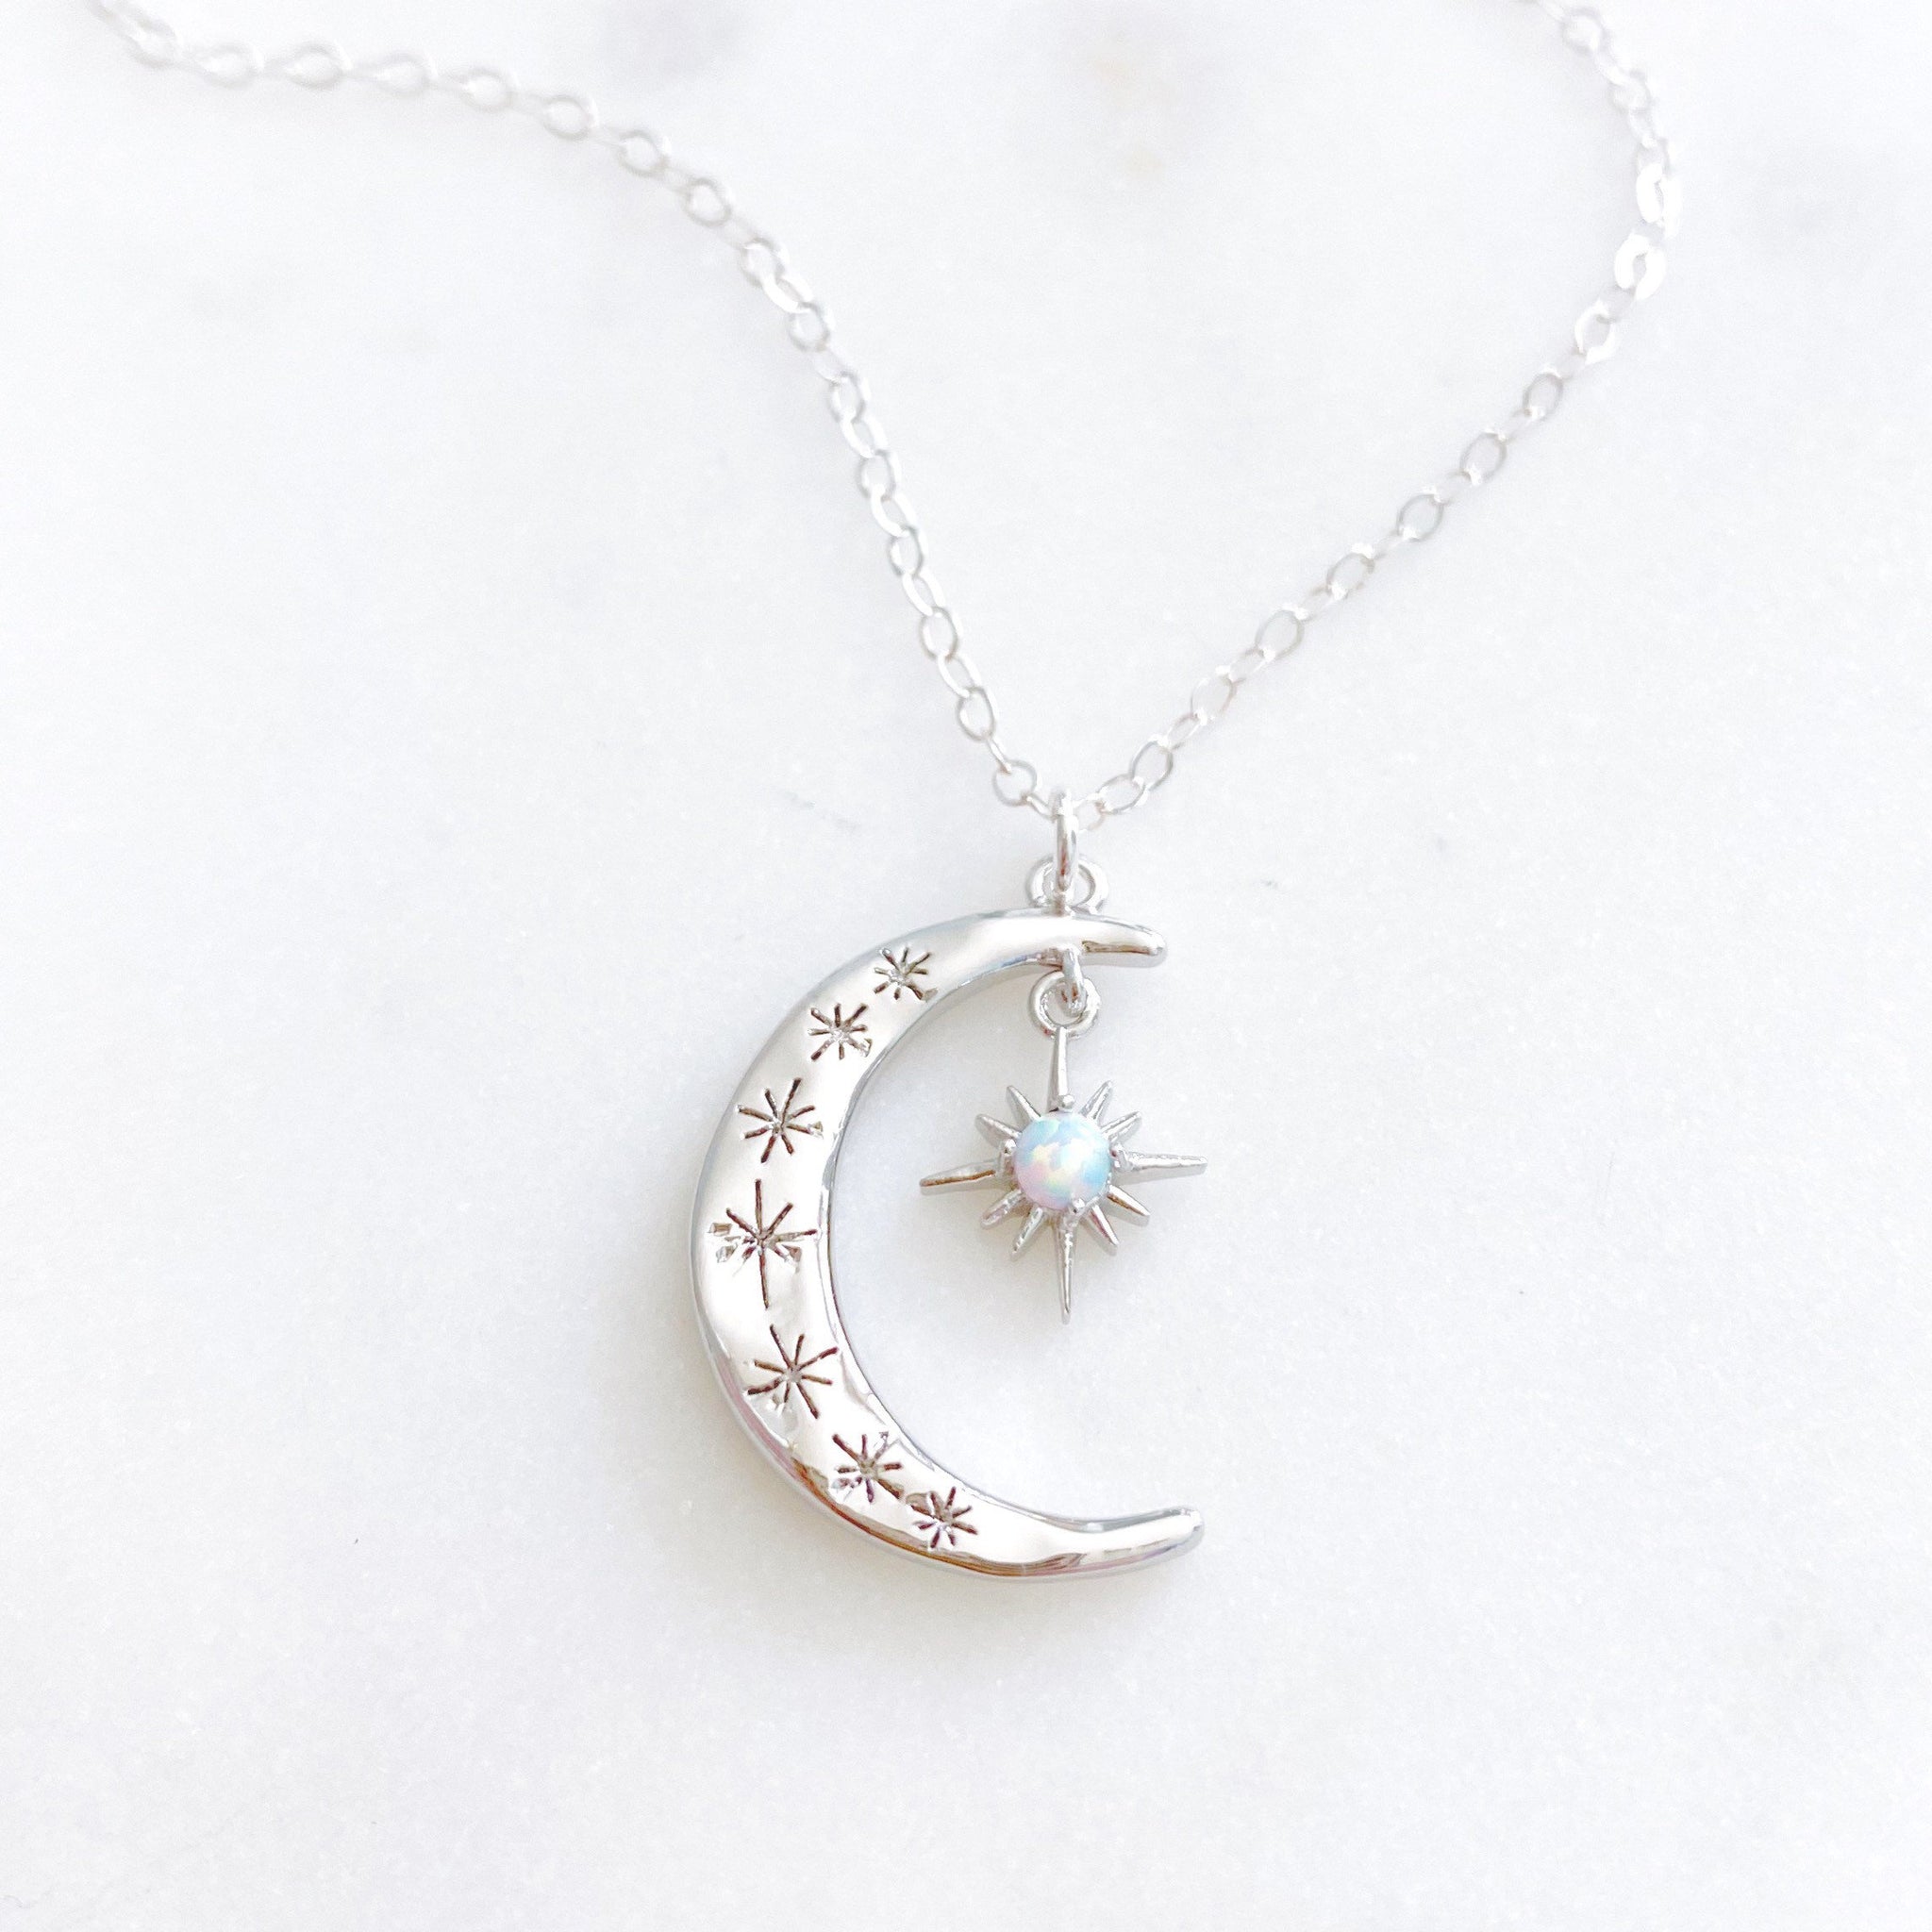 Moon Necklace, Crescent Moon Necklace, Silver Moon Necklace, Star Moon Necklace, Opal Necklace, Dainty Silver Necklace, AURORA